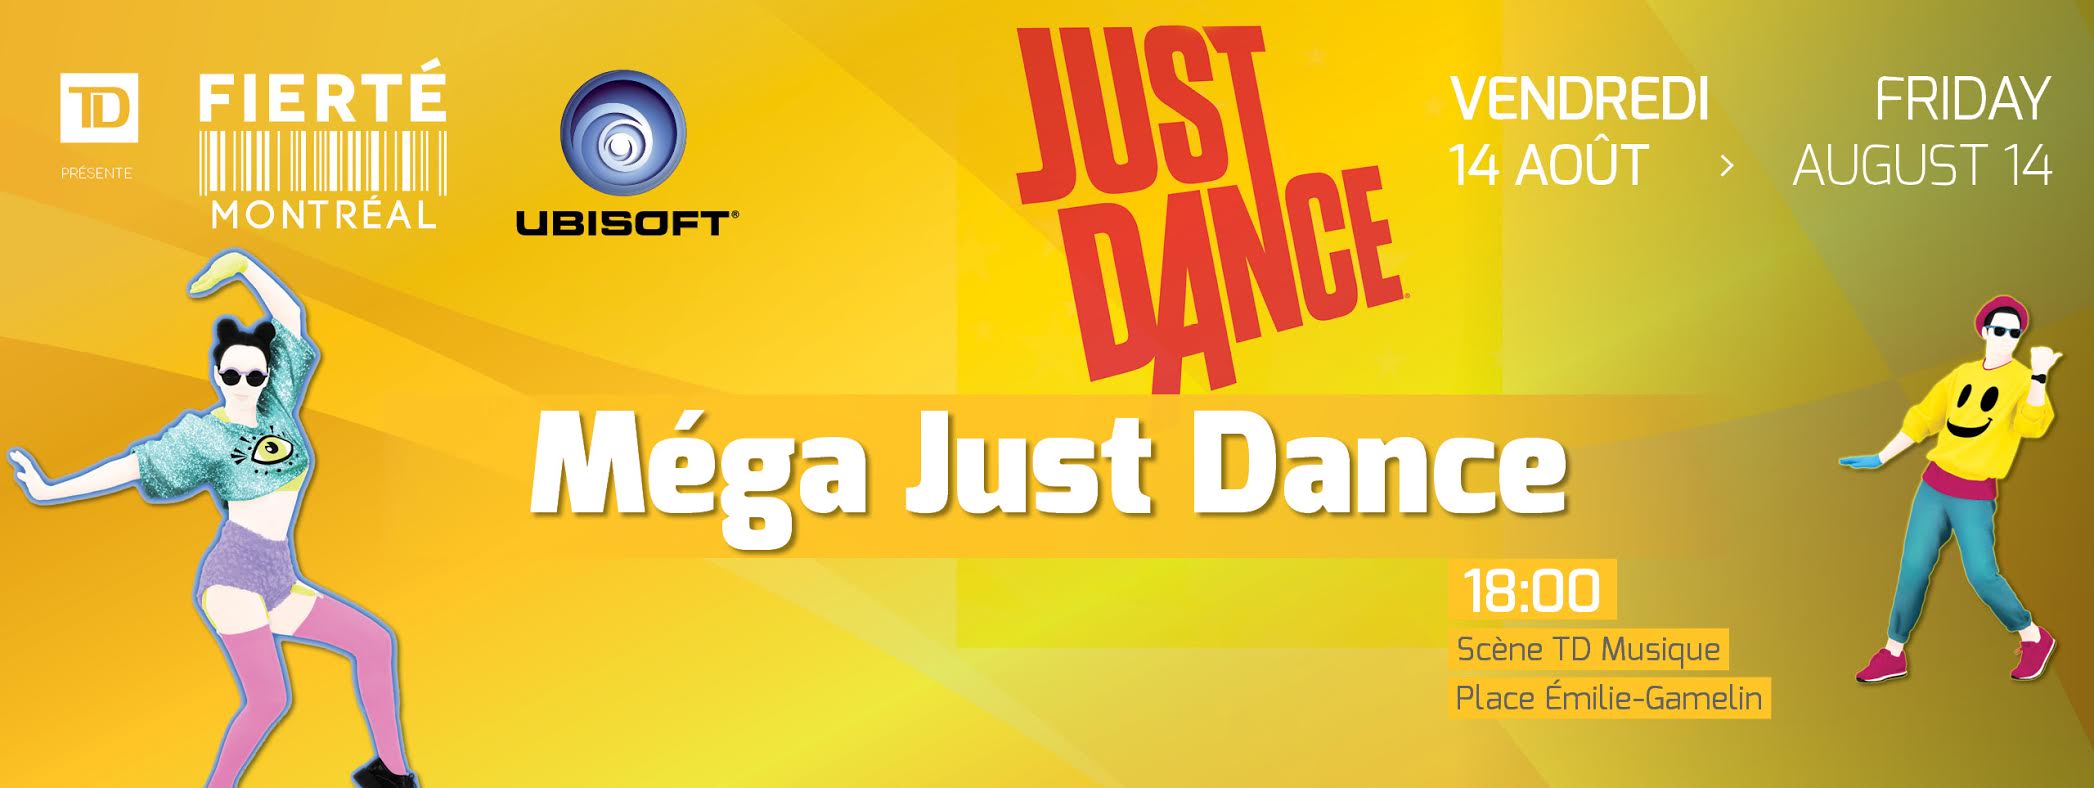 Fierte Montreal - Ubisoft - Mega Just Dance 2015